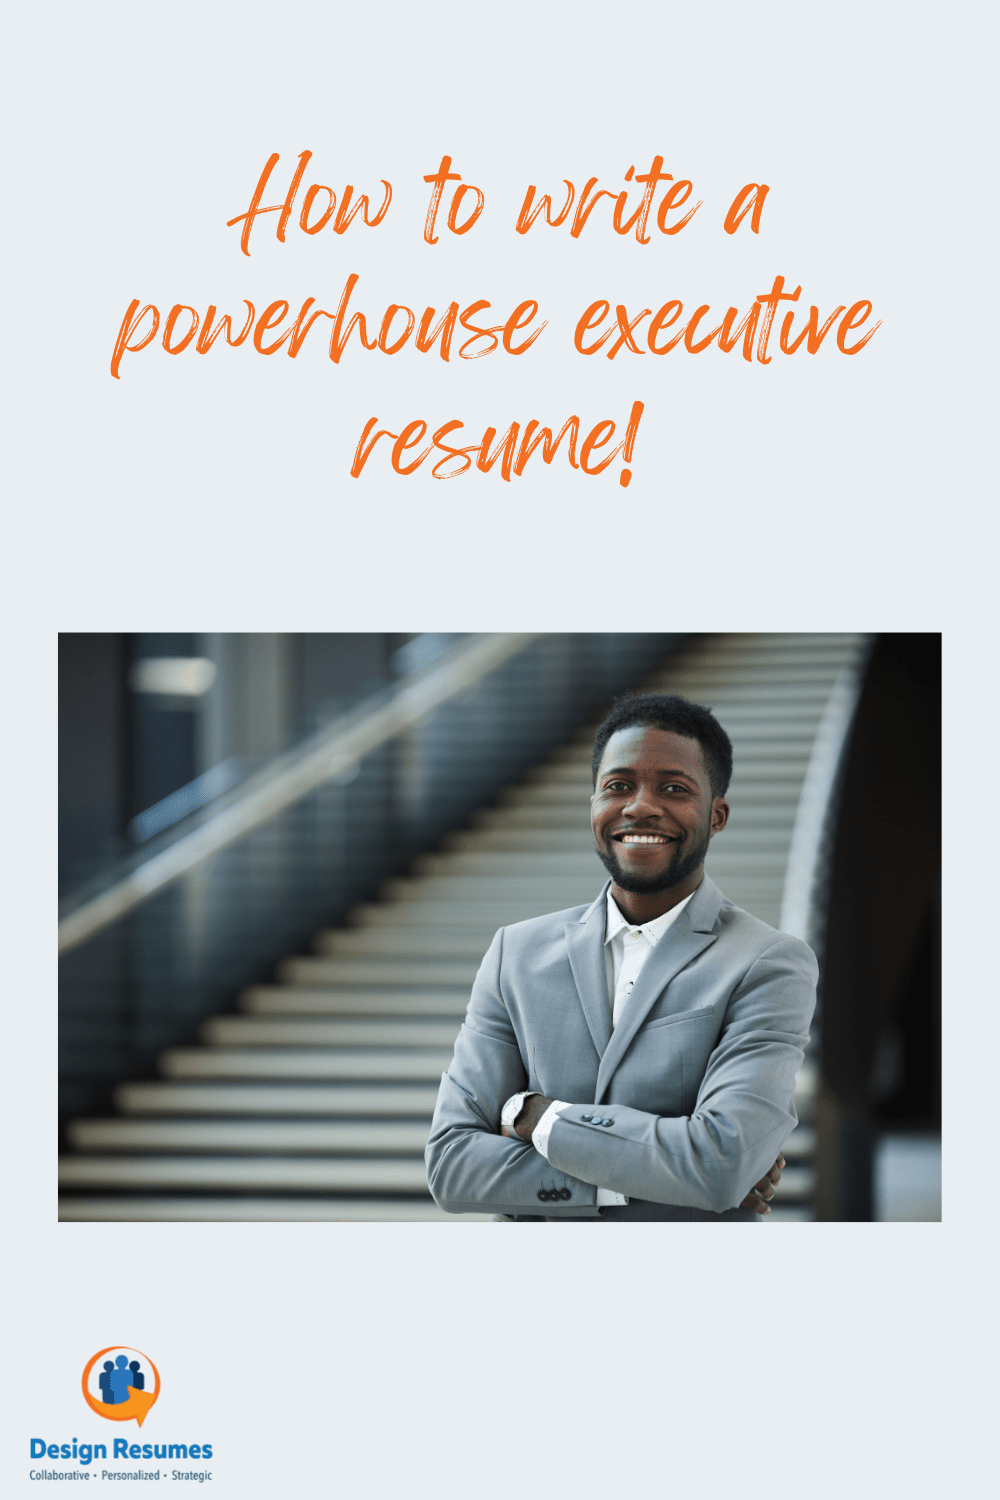 How to write a powerhouse executive resume!